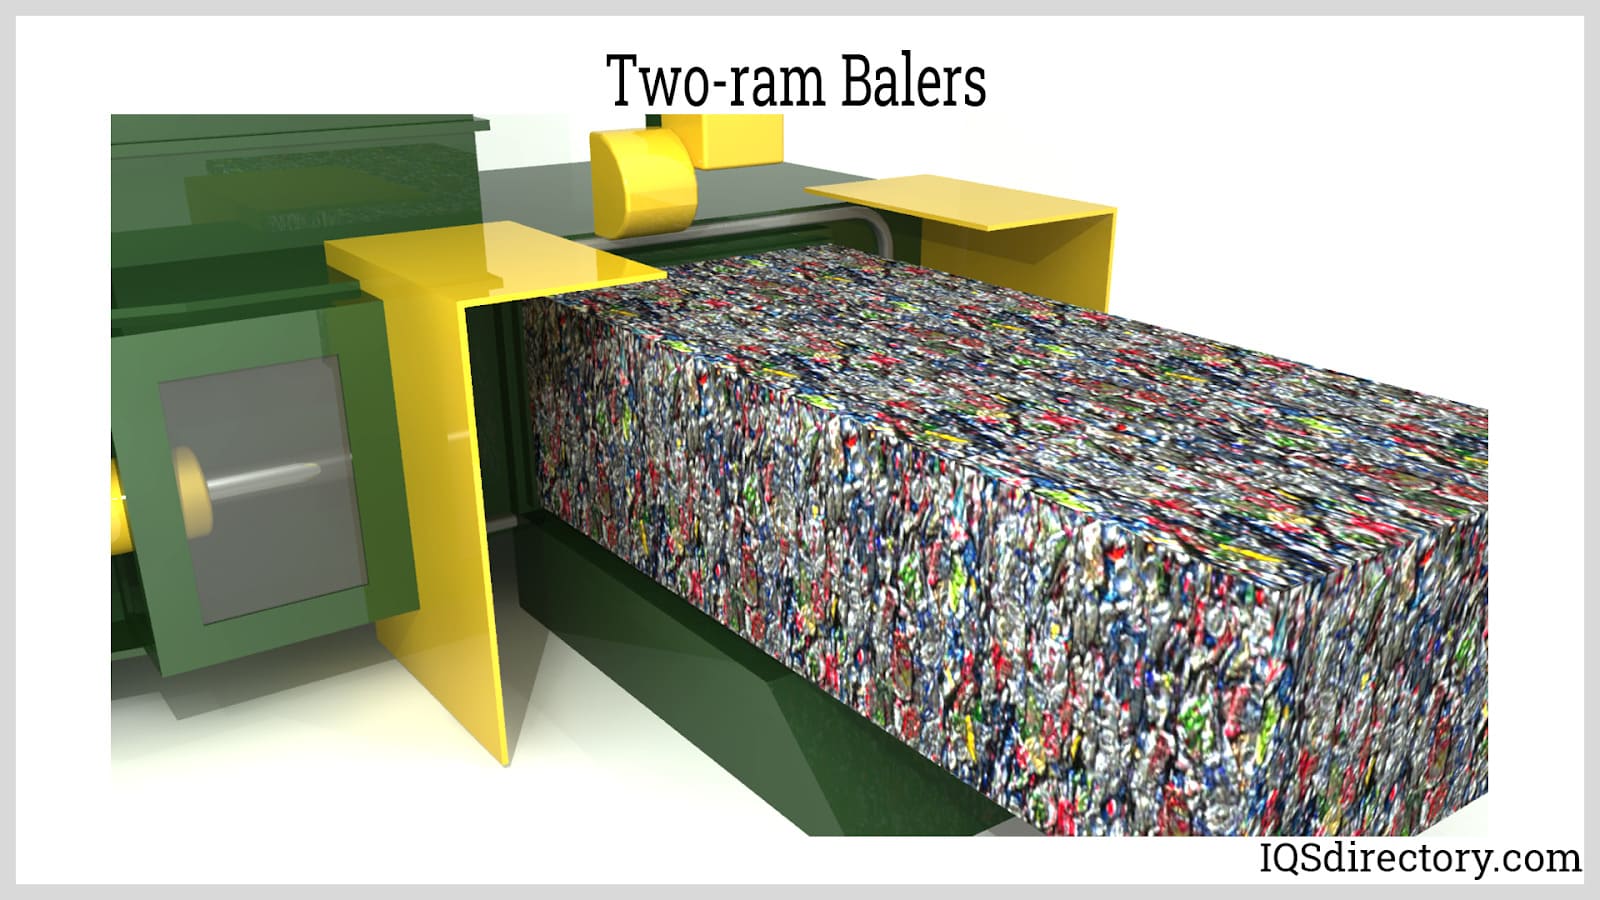 Two-ram Balers